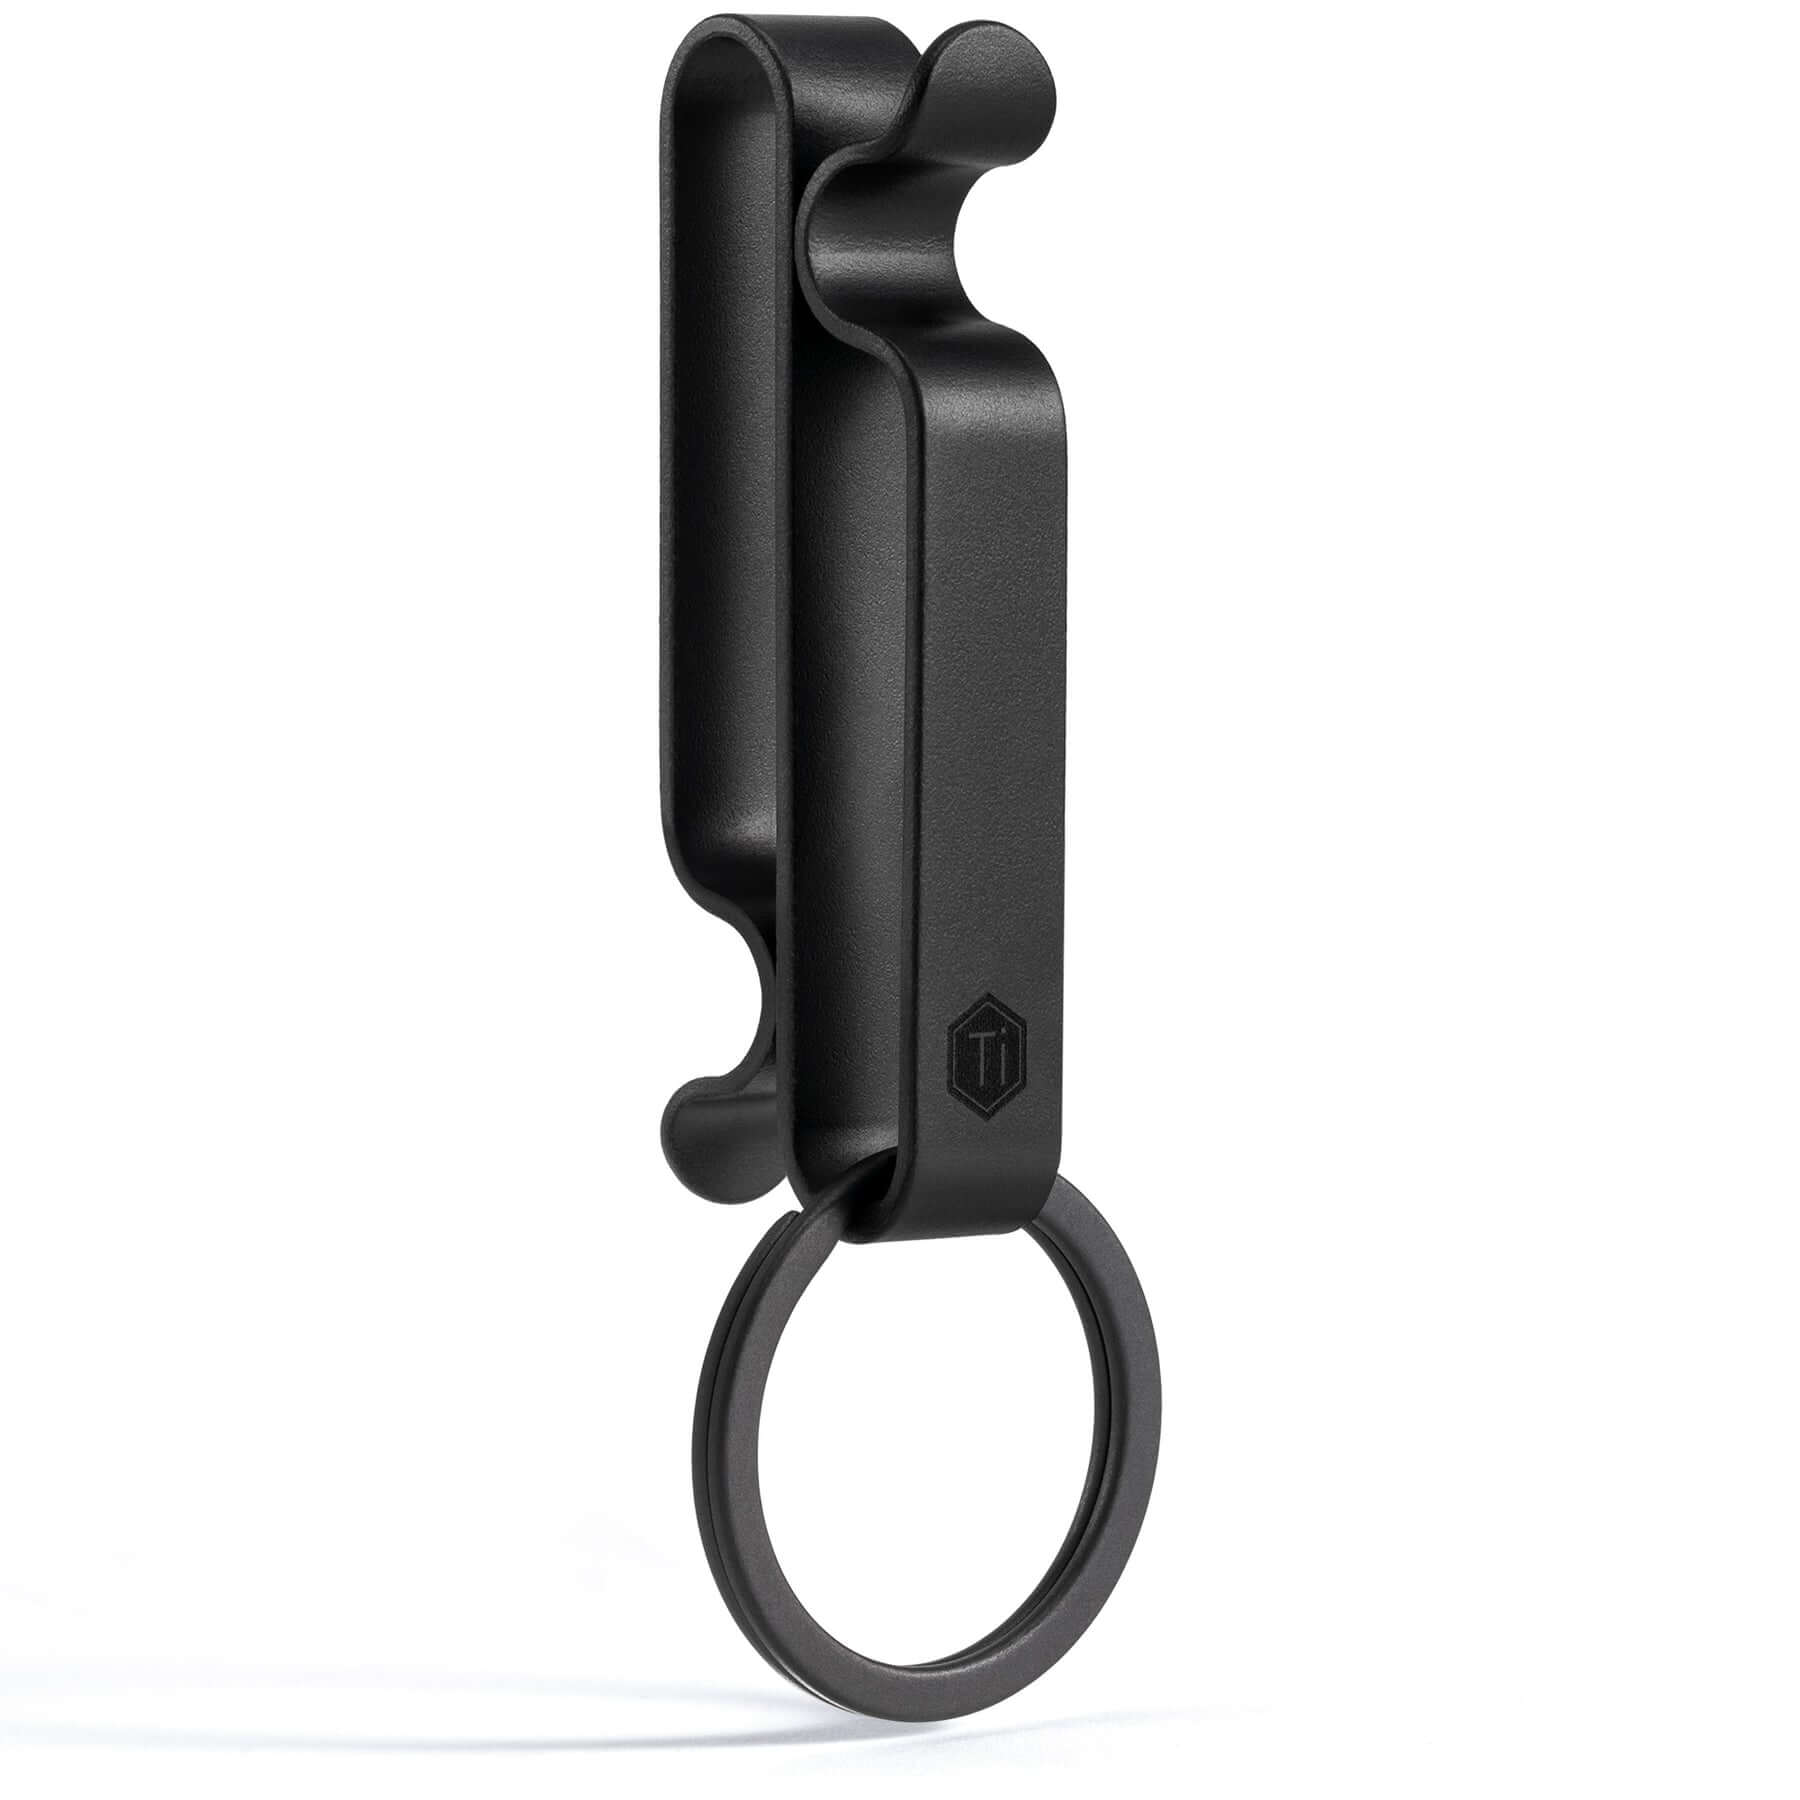 KM00 Titanium Alloy Keychain Belt Clip